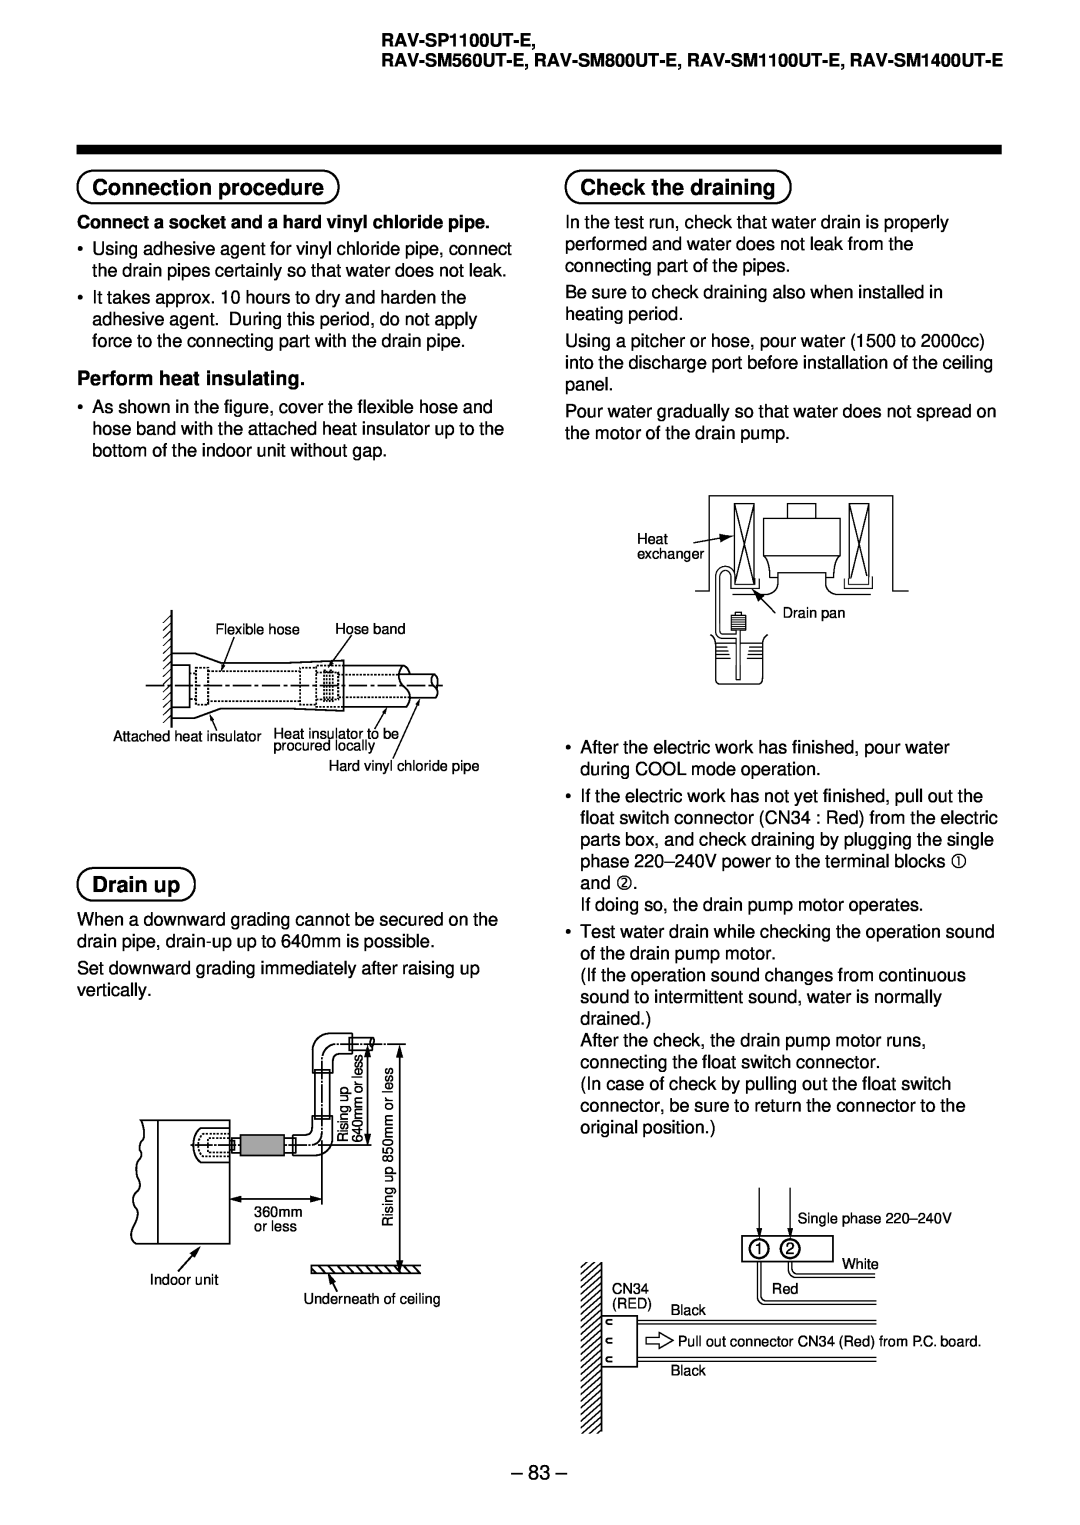 Toshiba RAV-SM561AT-E Connection procedure, Drain up, Check the draining, Perform heat insulating, RAV-SP1100UT-E 